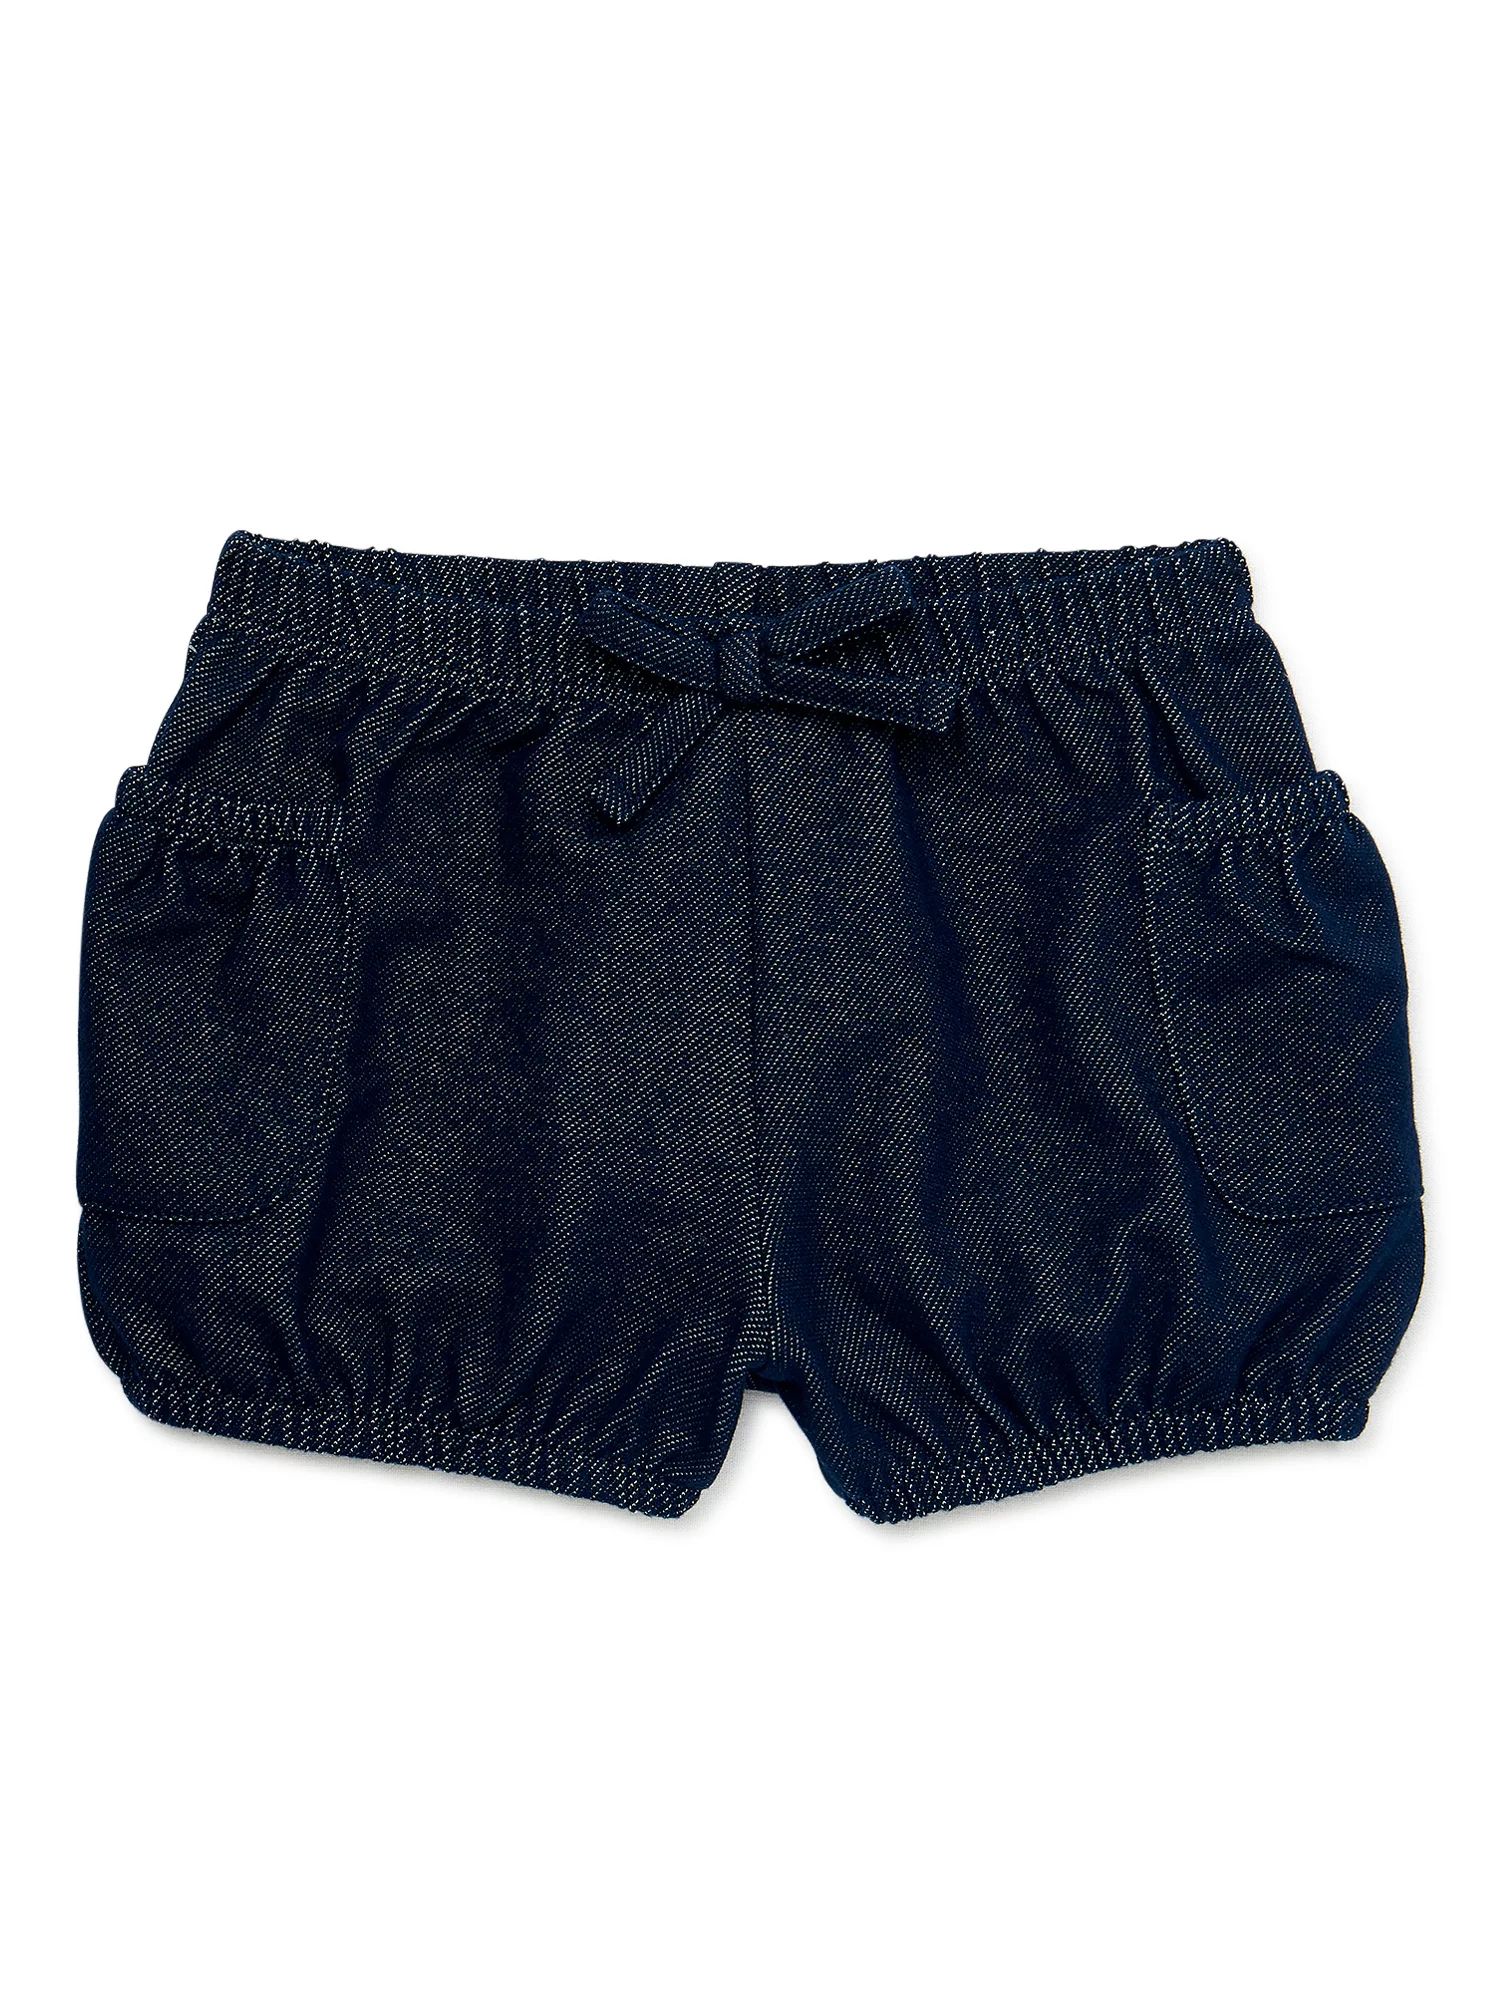 Garanimals Baby Girls Bubble Shorts, Sizes 0-24M | Walmart (US)